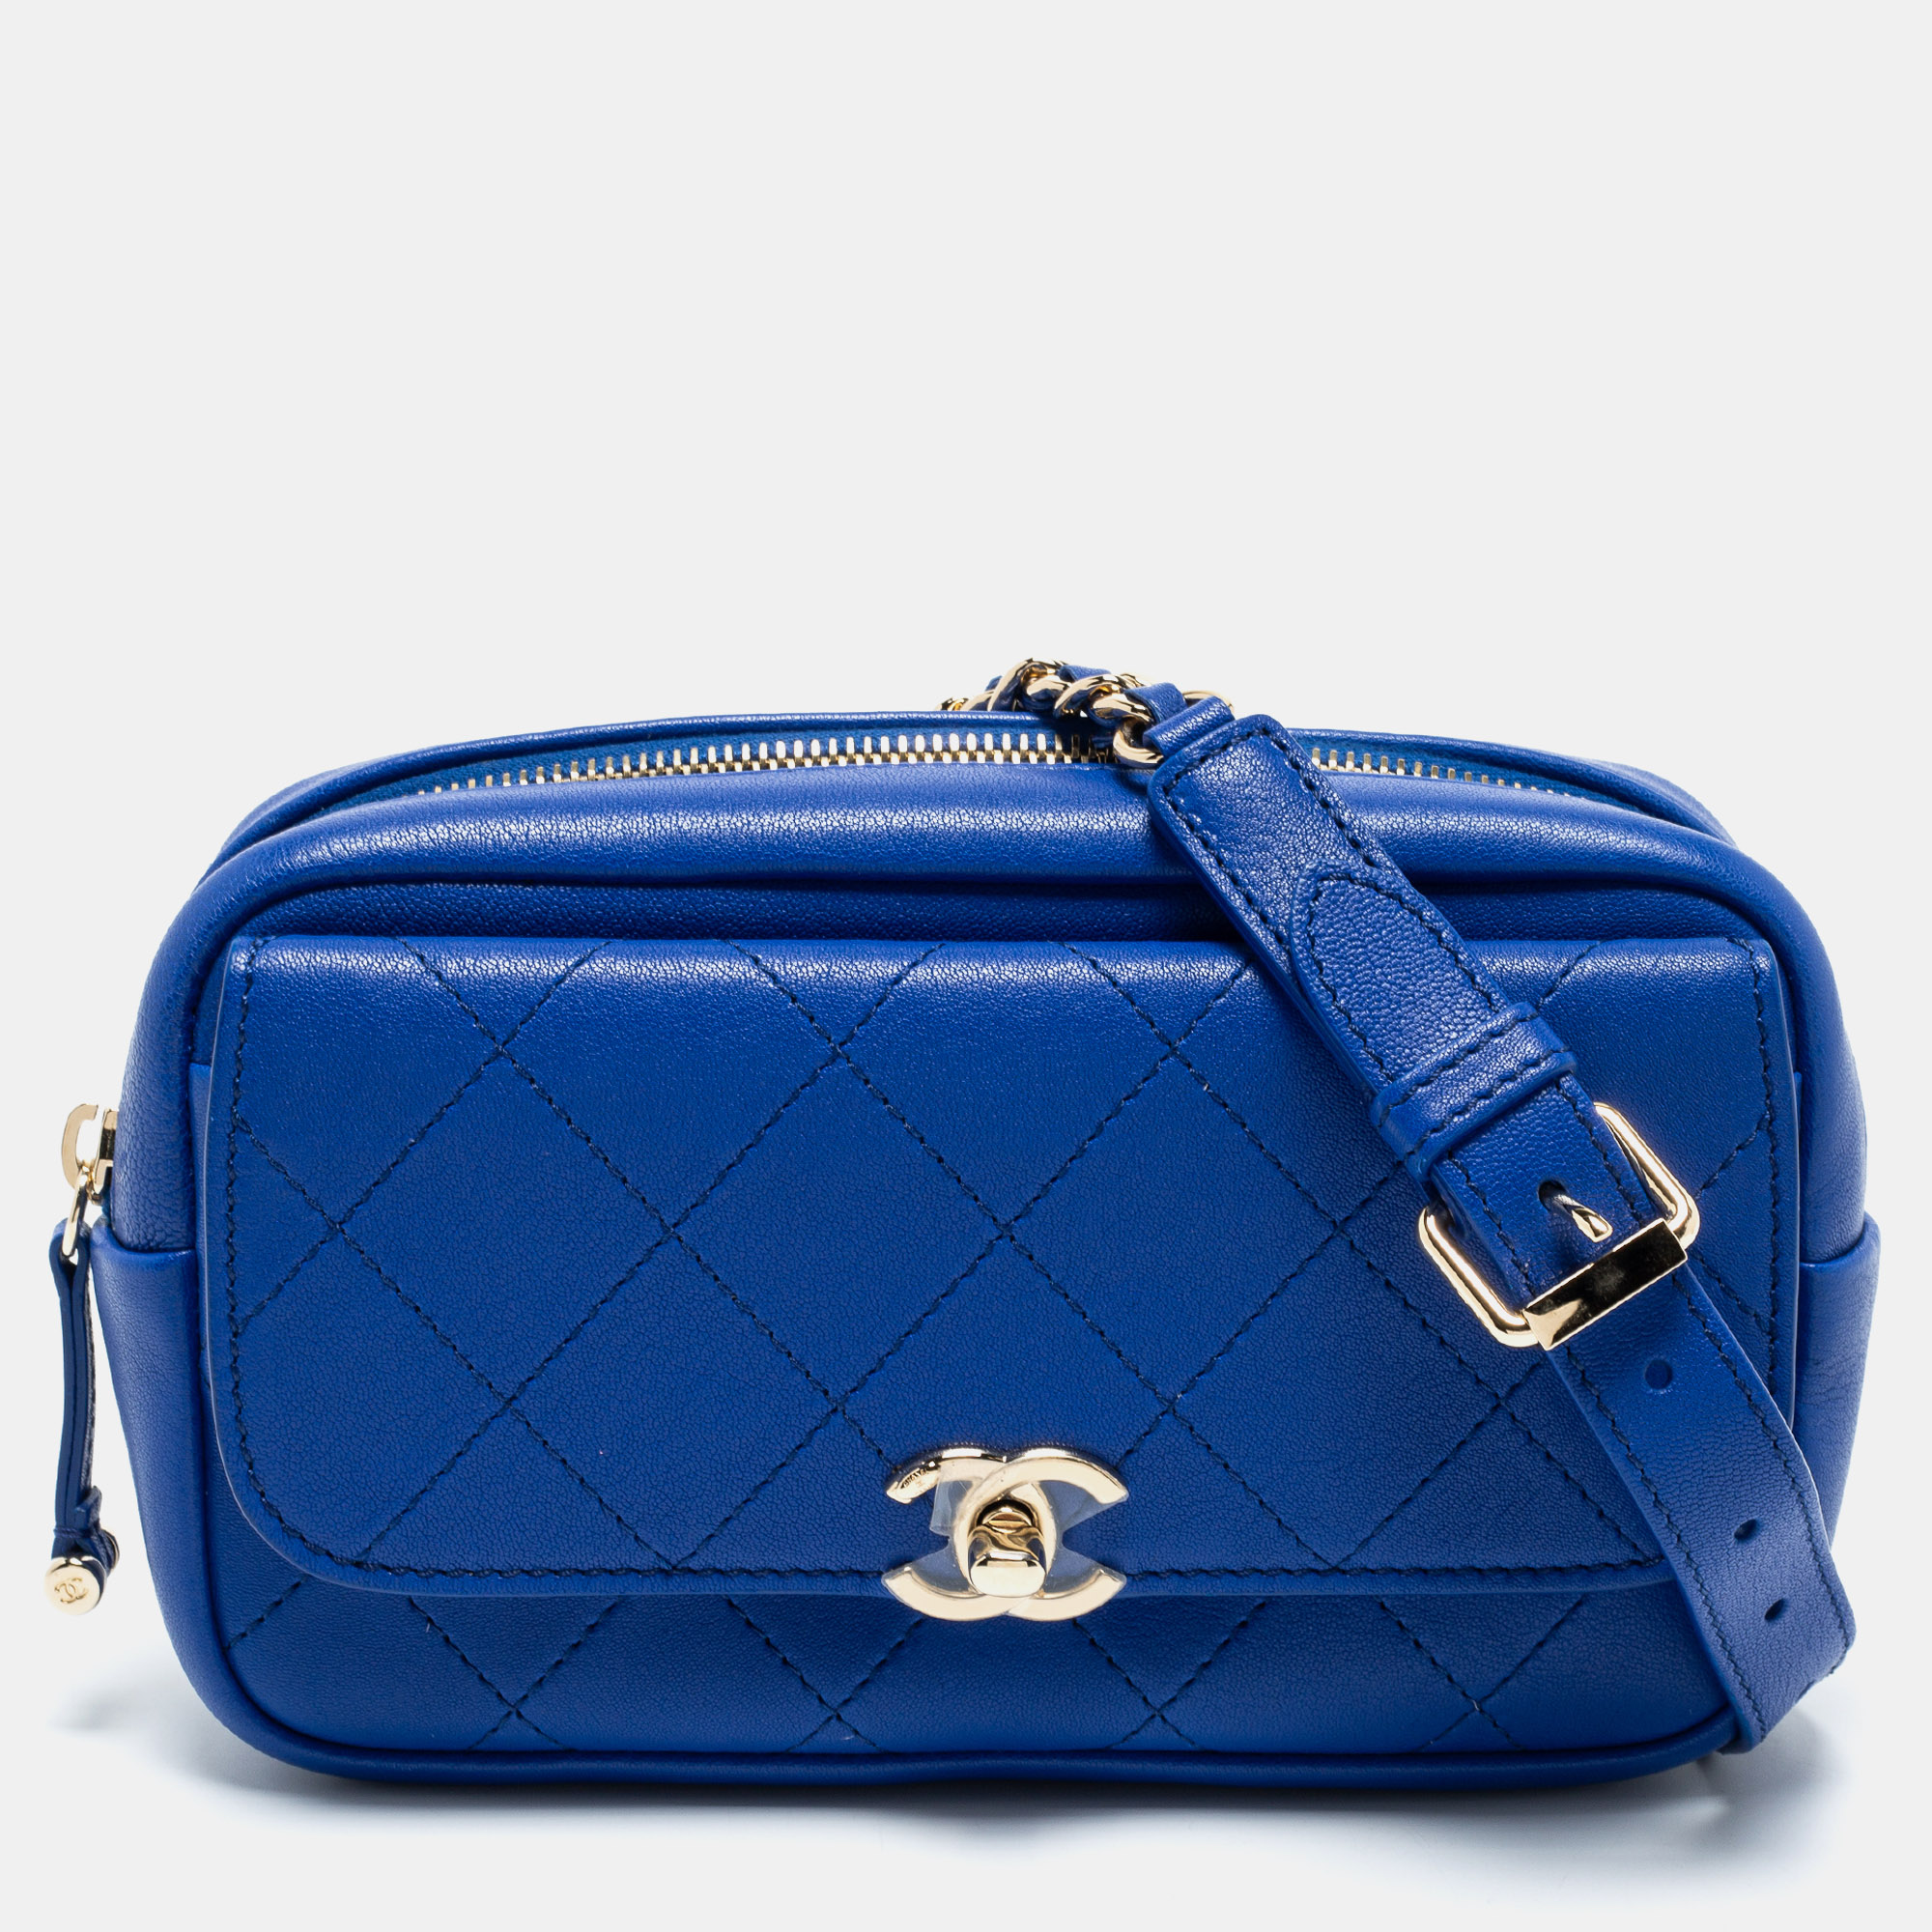 Pre-owned Chanel Blue Leather Cc Flap Belt Bag